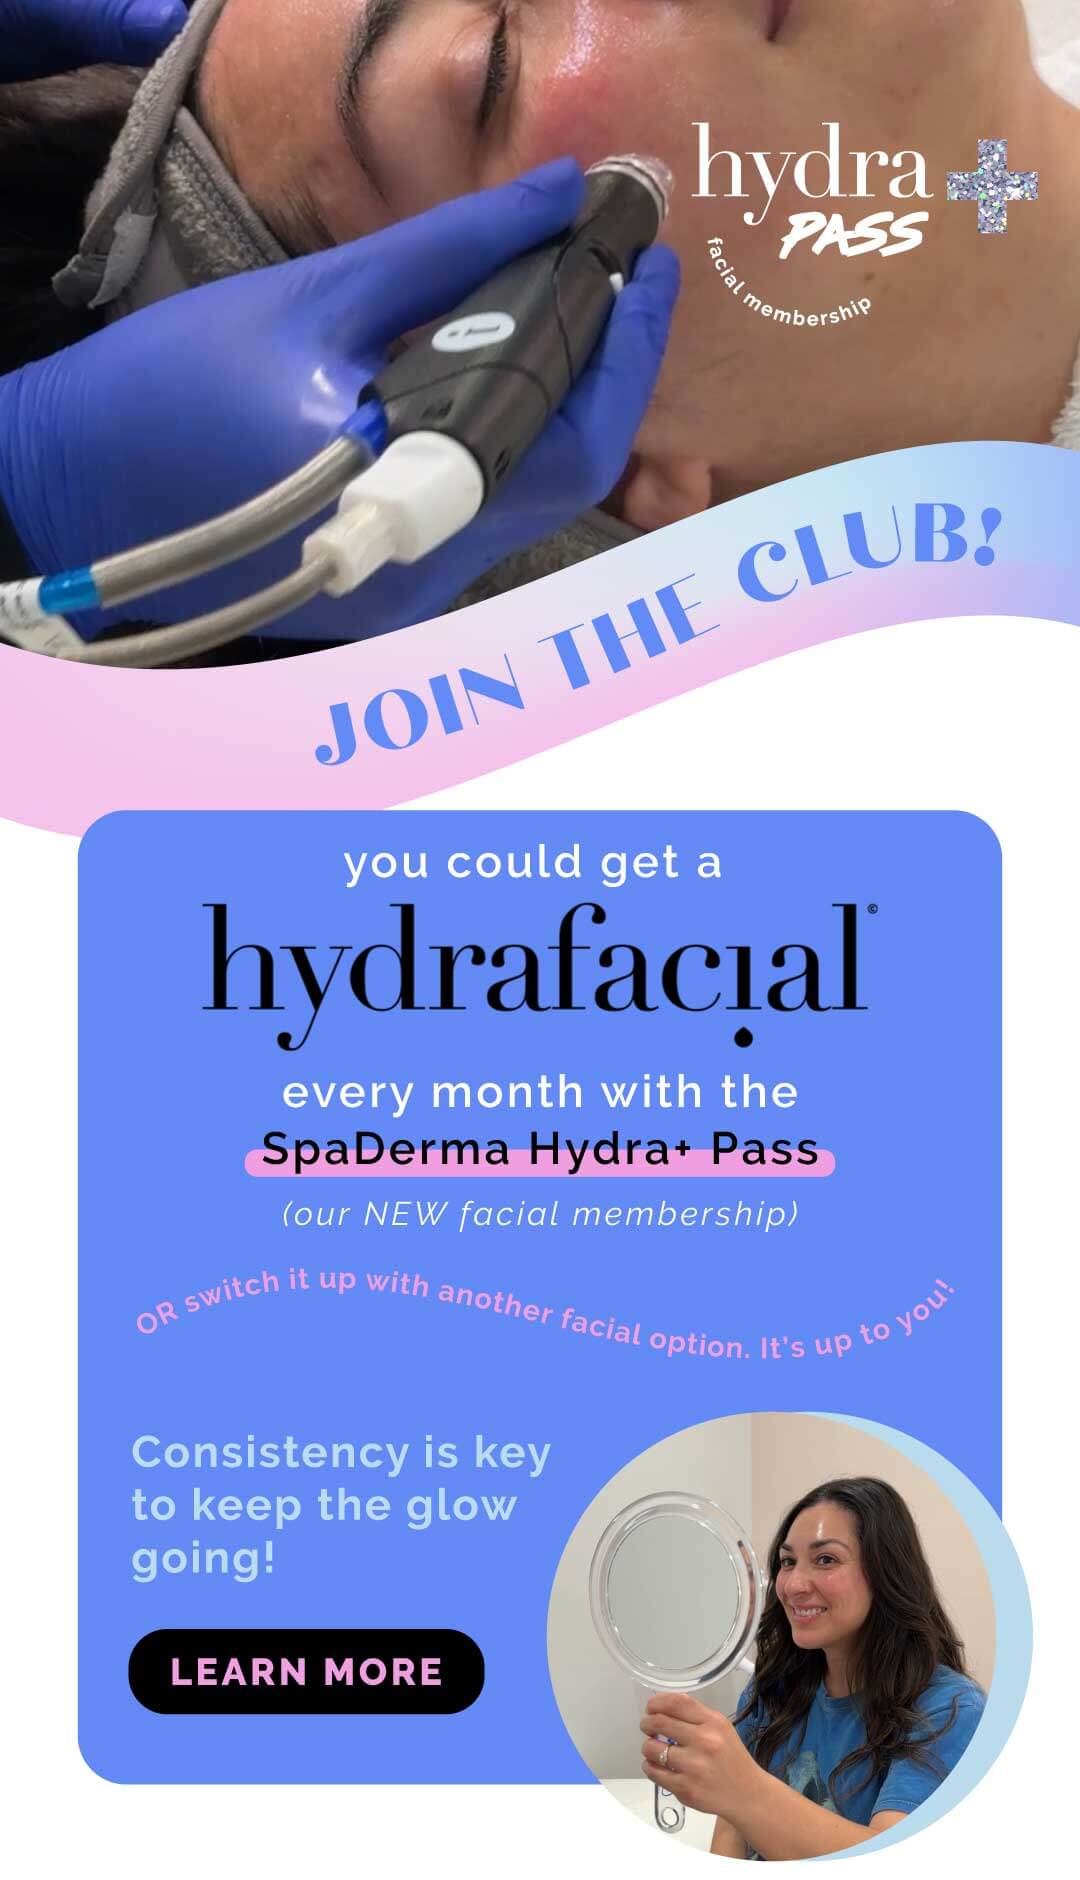 promotion,skincare,Advanced skincare,hydrafacial,facial treatments,membership